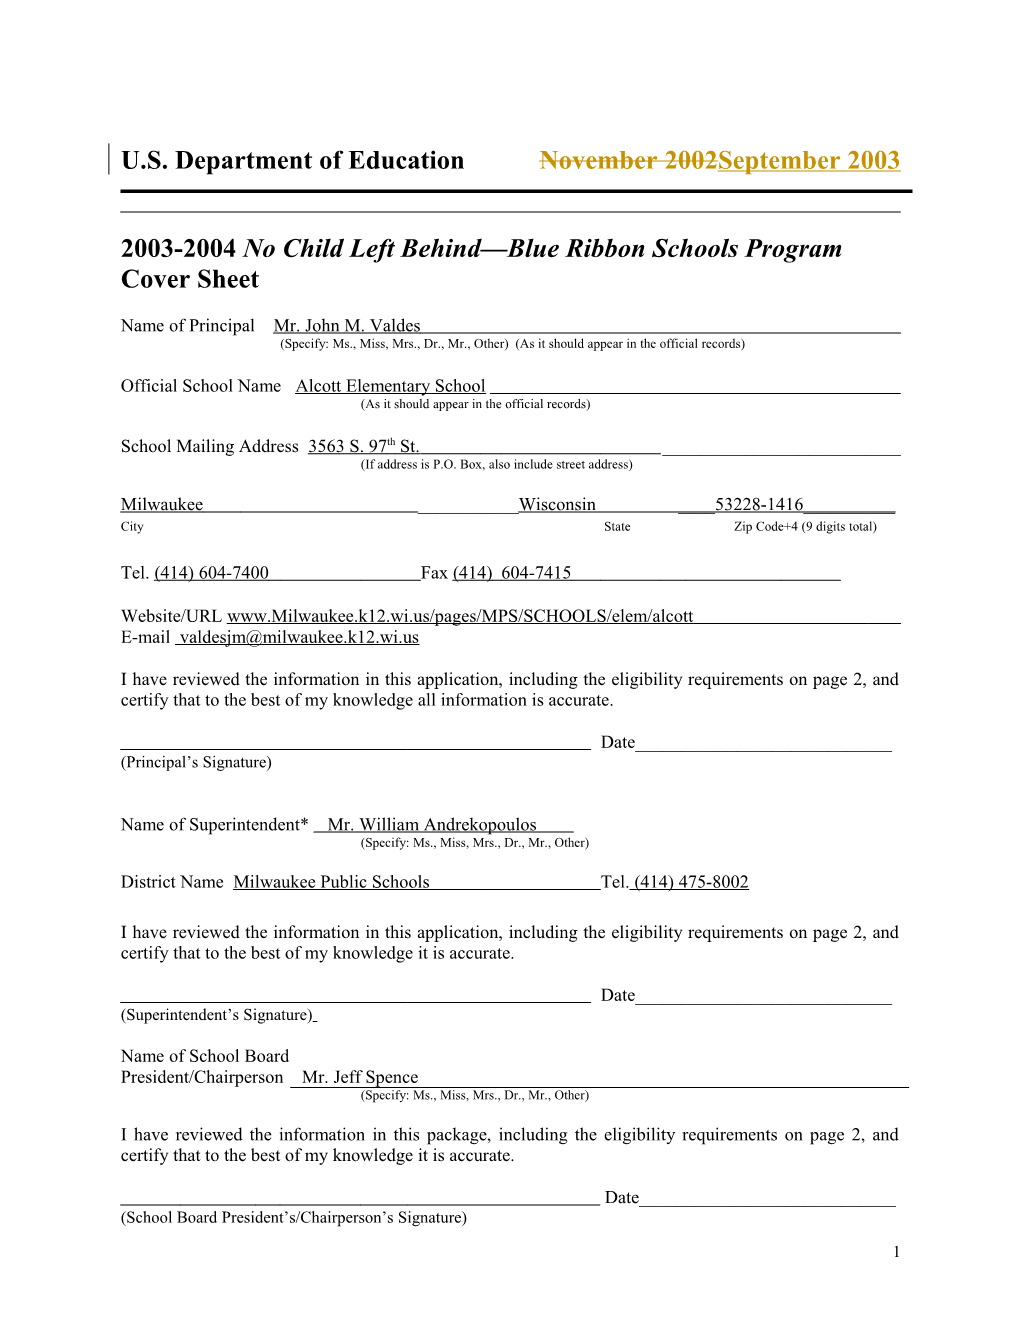 Alcott Elementary School 2004 No Child Left Behind-Blue Ribbon School Application (Msword)